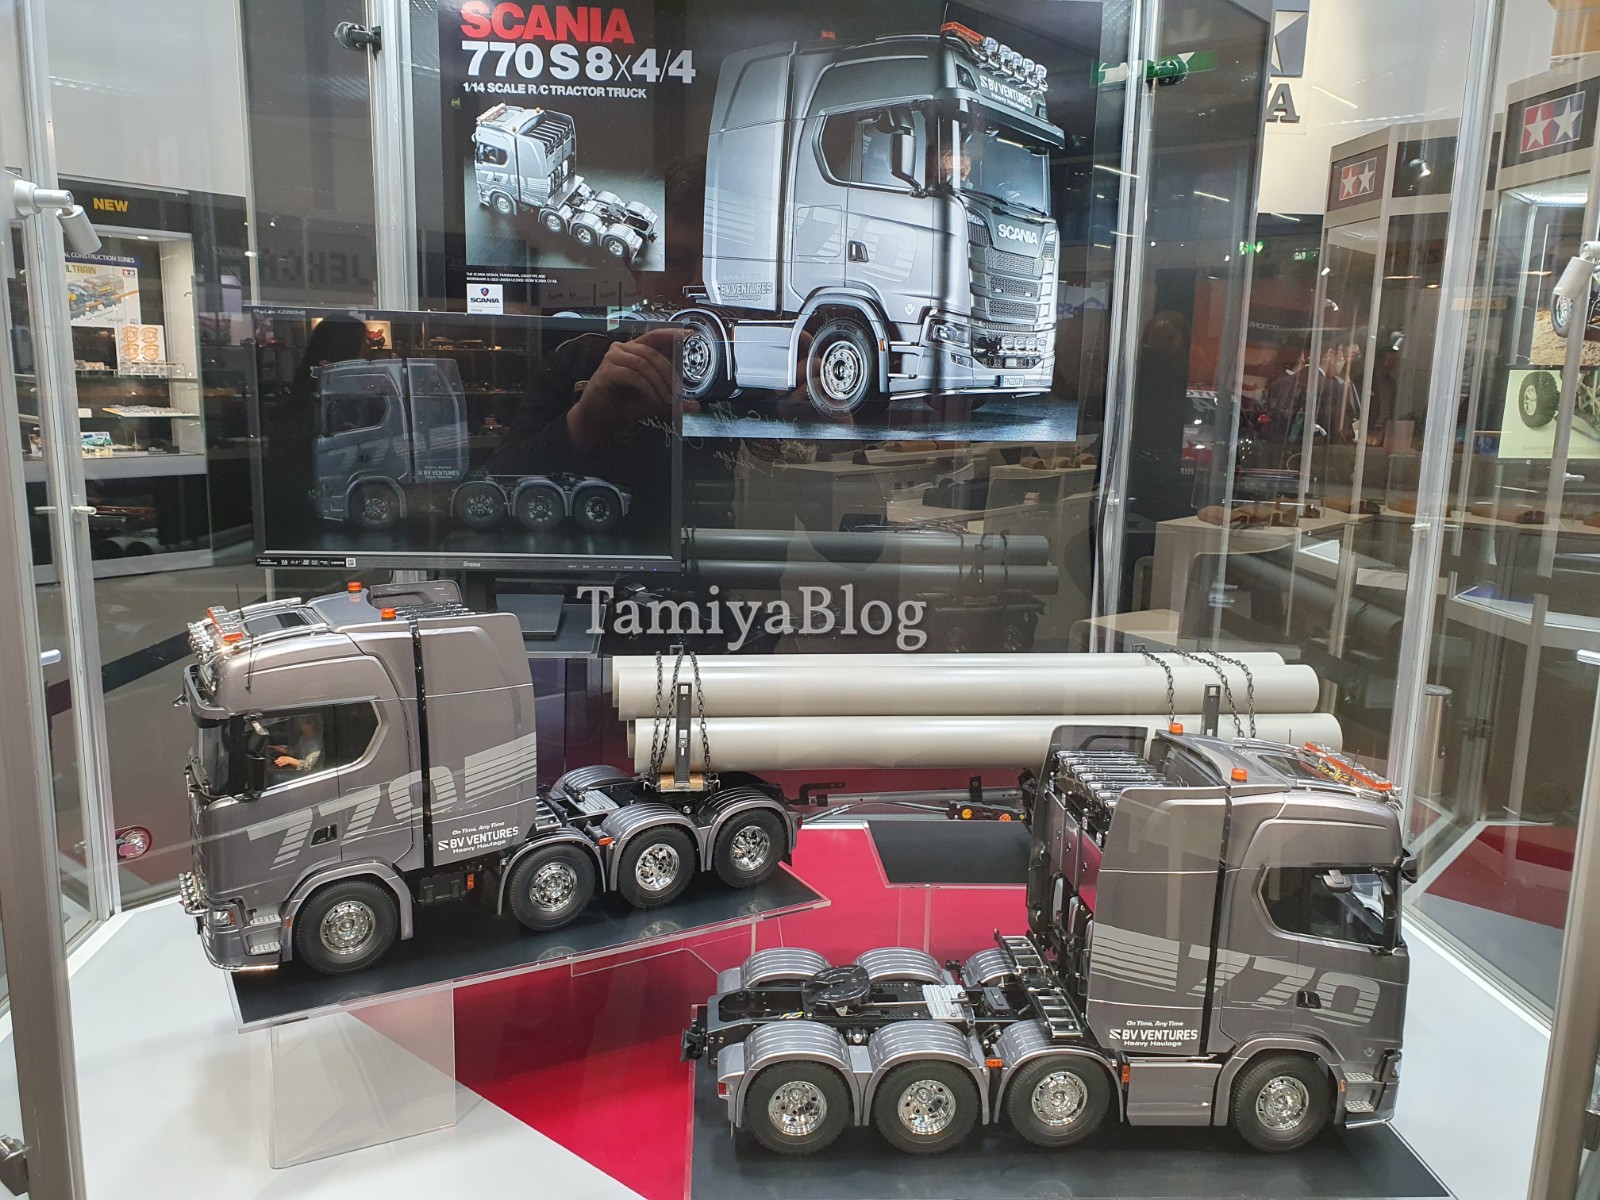 Tamiya 56371 1 14 Rc Scania 770s 8 4